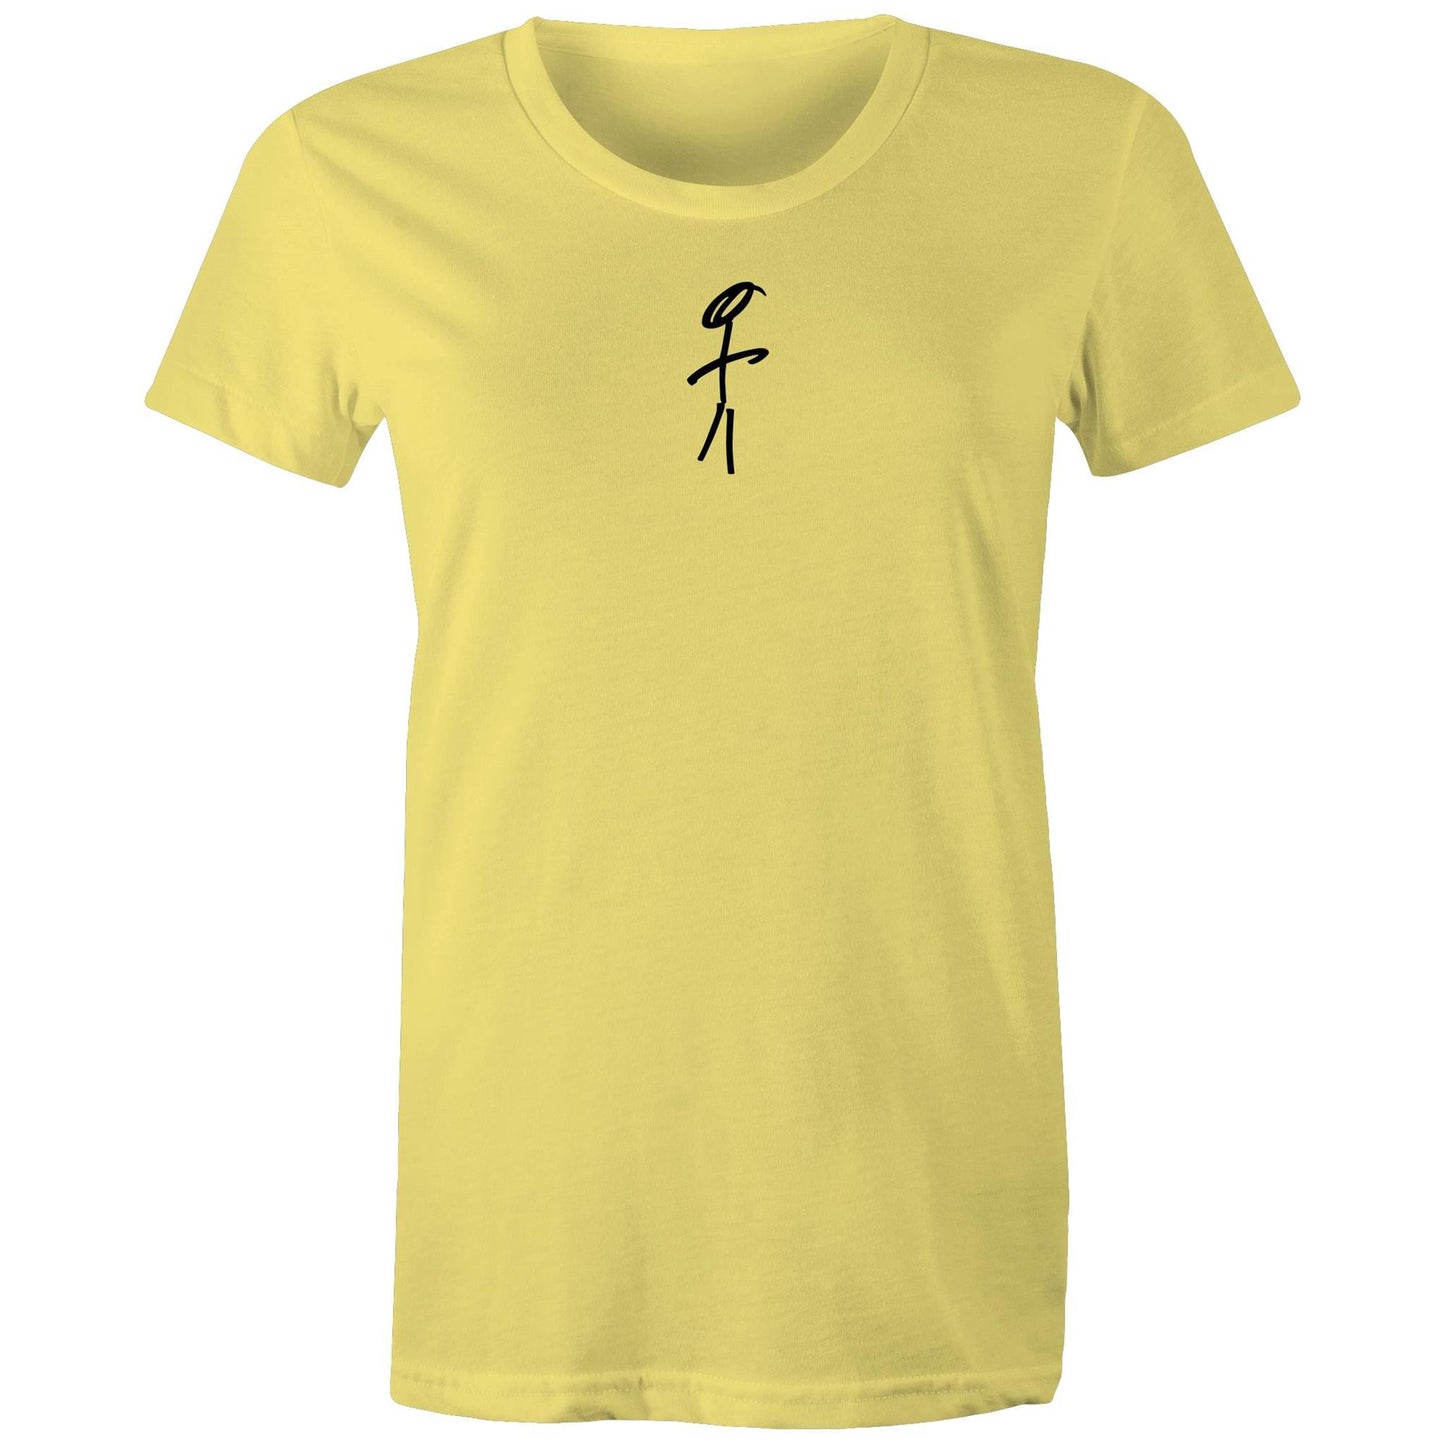 Stick Man T Shirts for Women